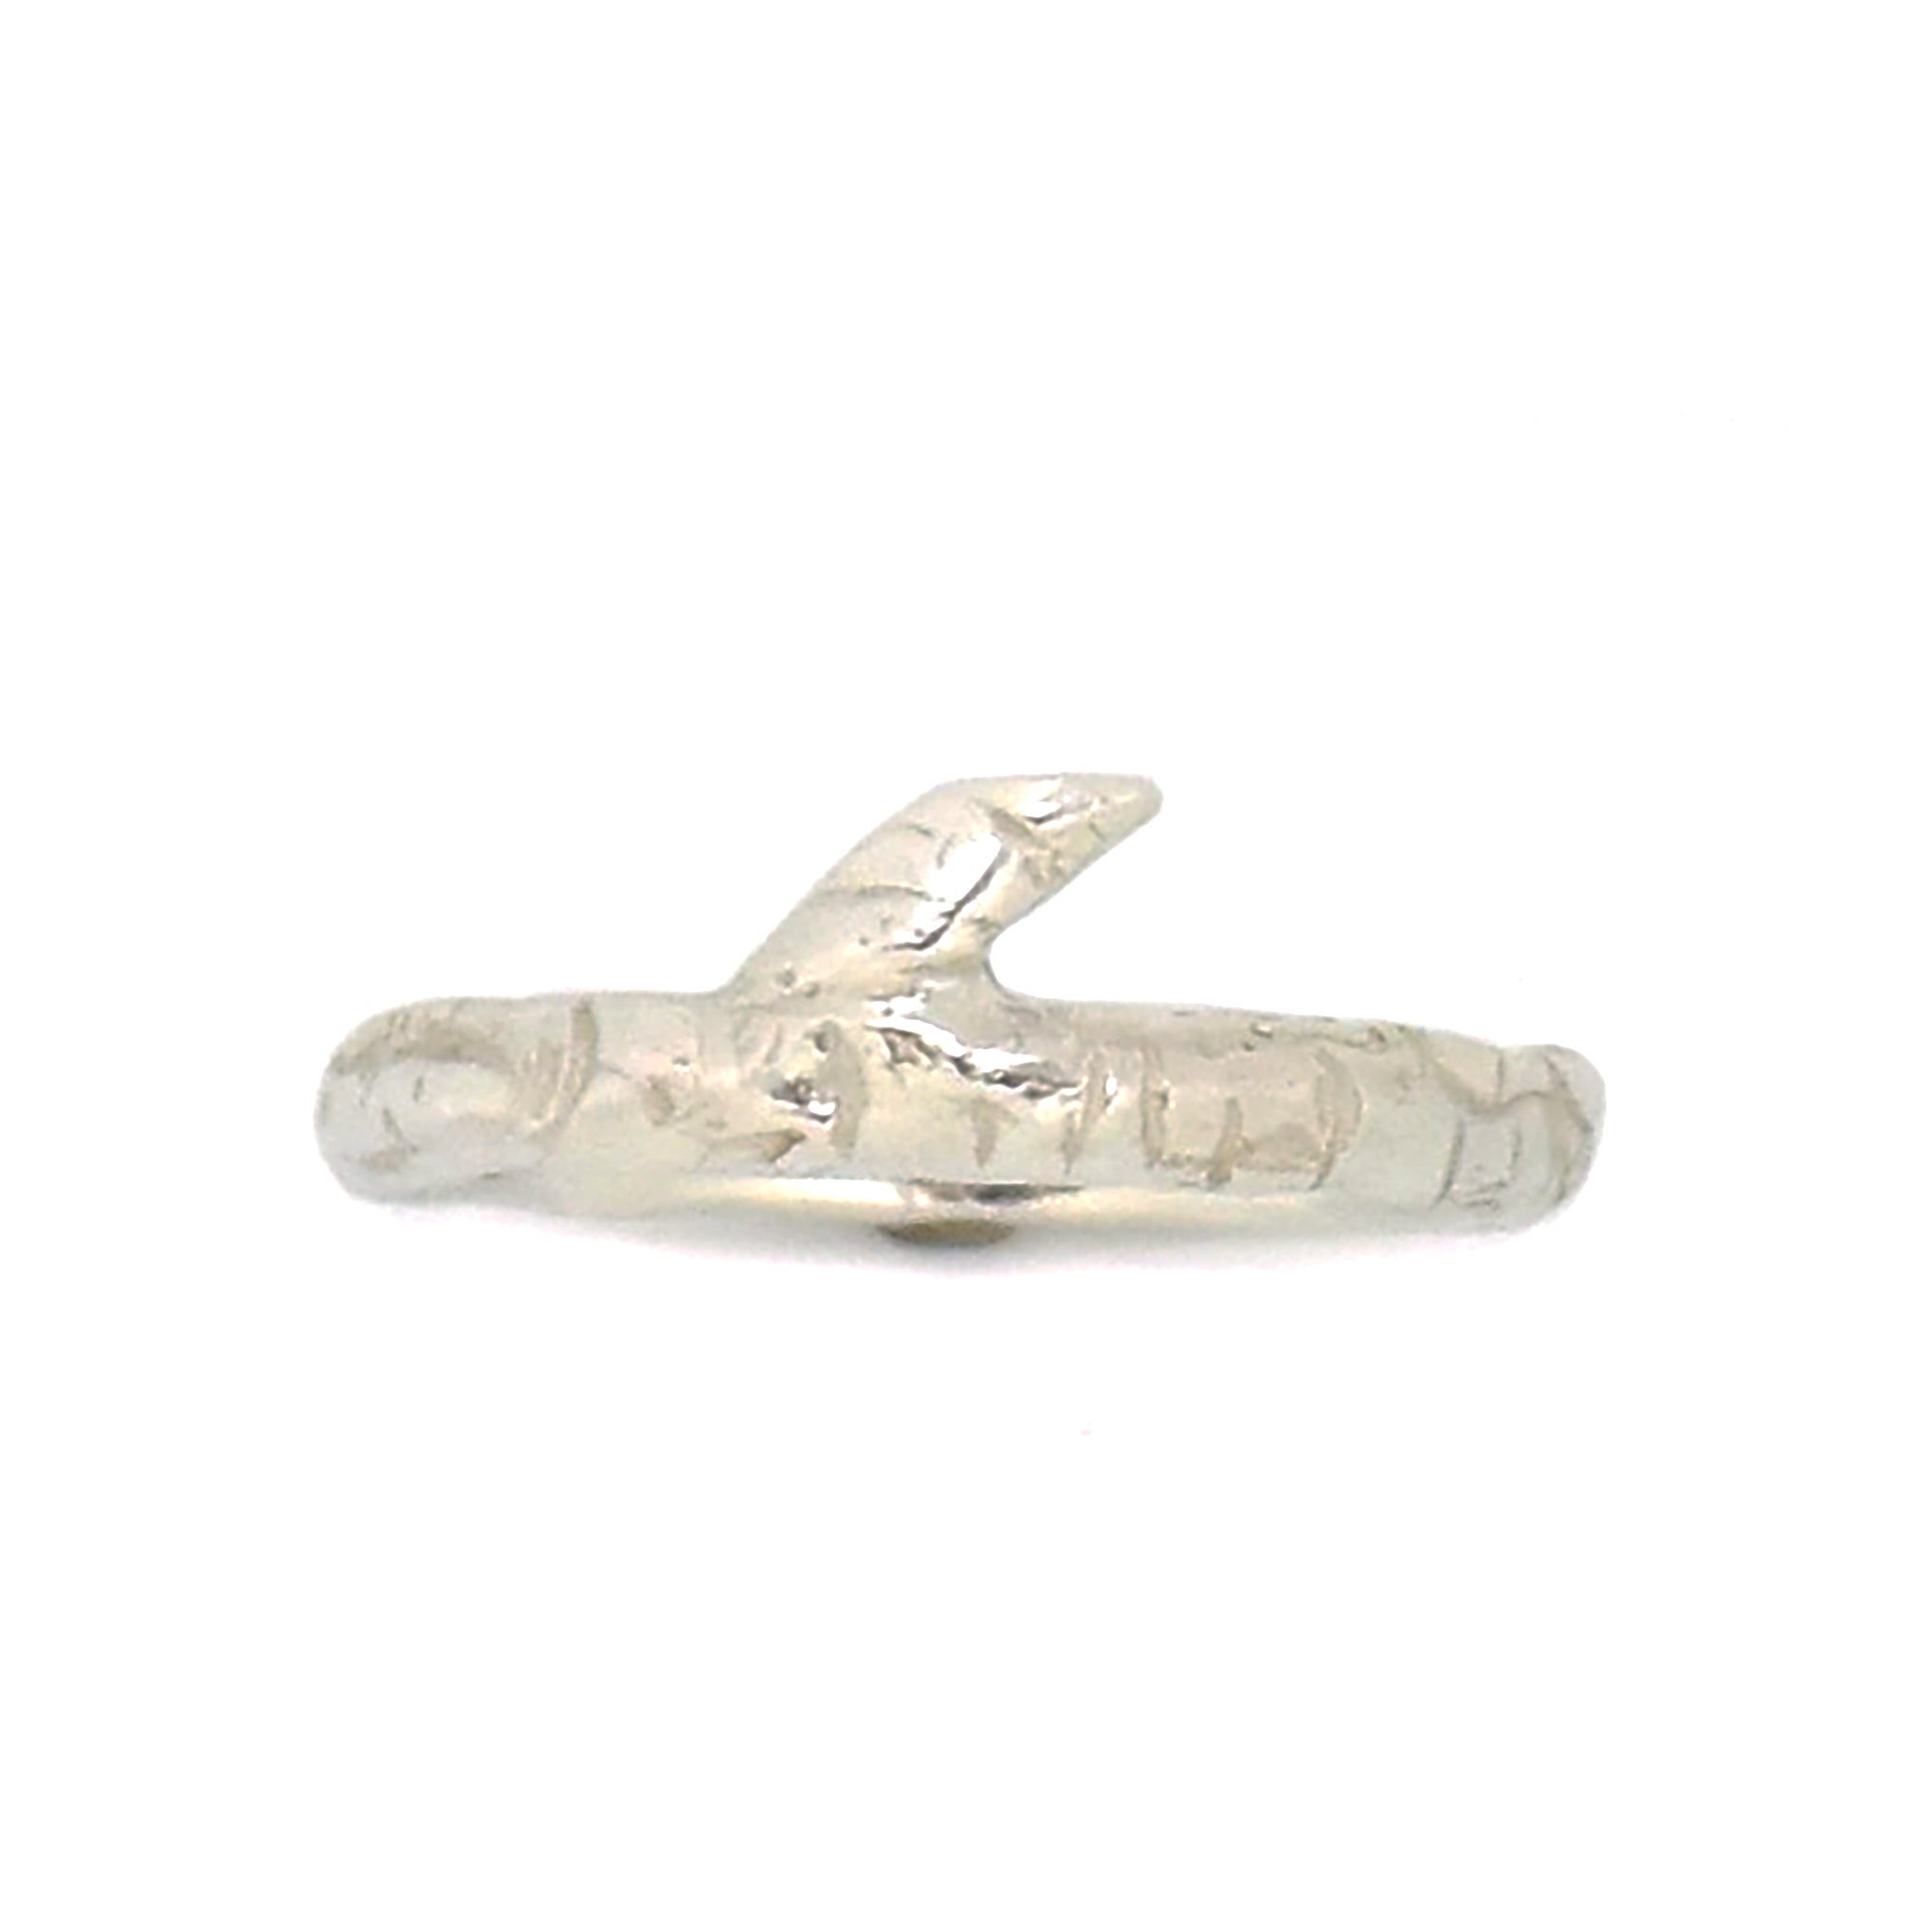 Gold Birch Branch Ring - your choice of gold - Wedding Ring 18K Palladium White Gold 14K Rose Gold 6356 - handmade by Beth Millner Jewelry